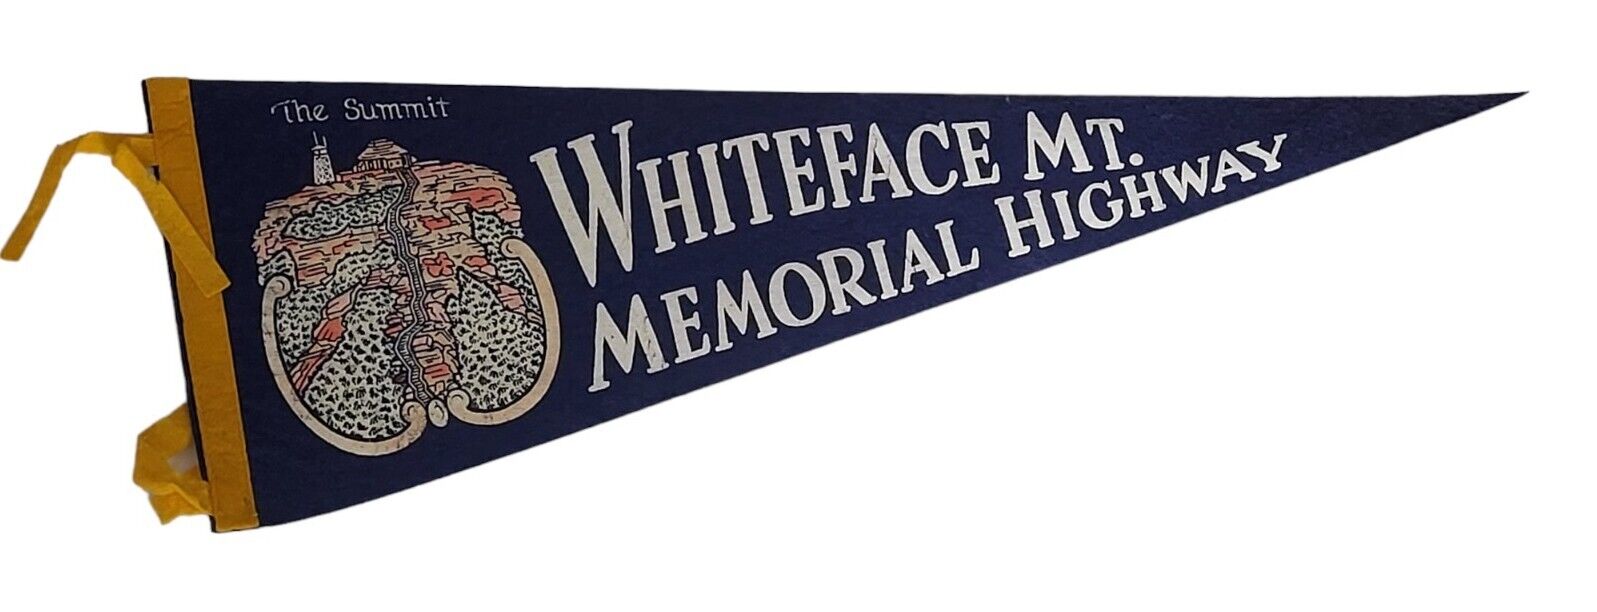 The Summit Whiteface Mt. Memorial Highway Vintage Pennant Felt - Travel New York